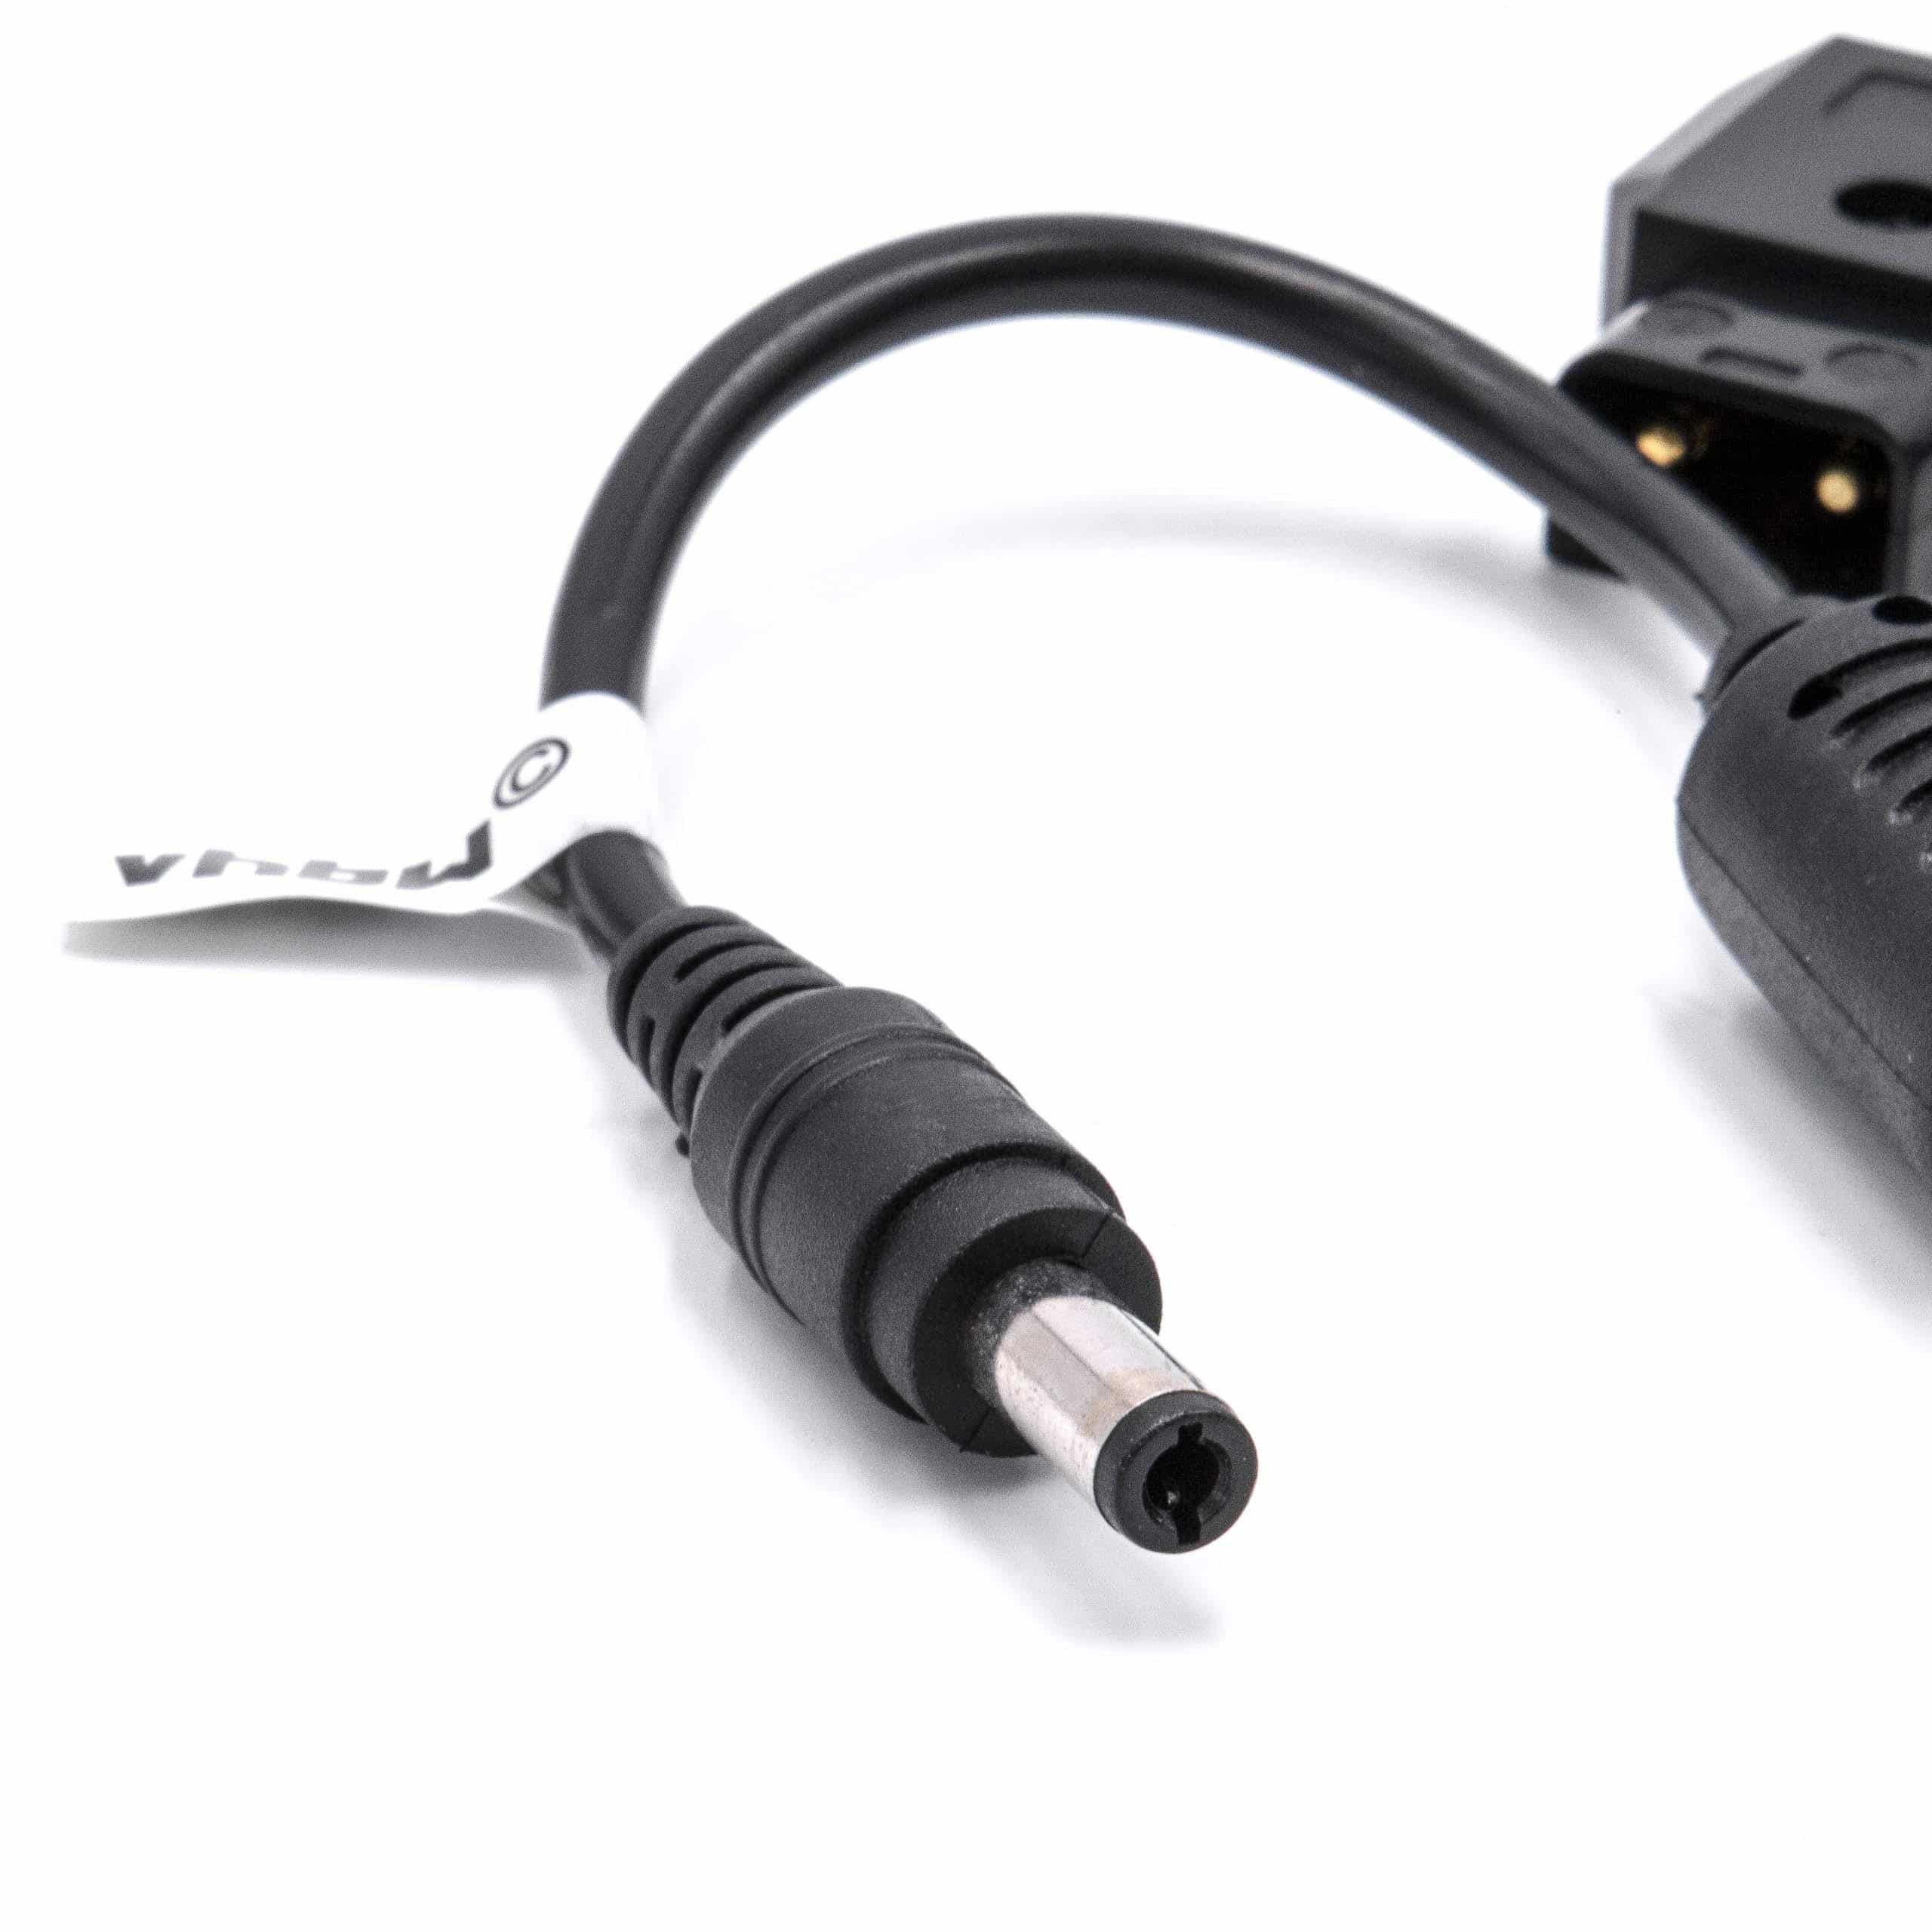 Cable adaptador D-Tap (m) a fuente alimentación LED para cámara Anton Bauer D-Tap, Dionic - 1 m negro